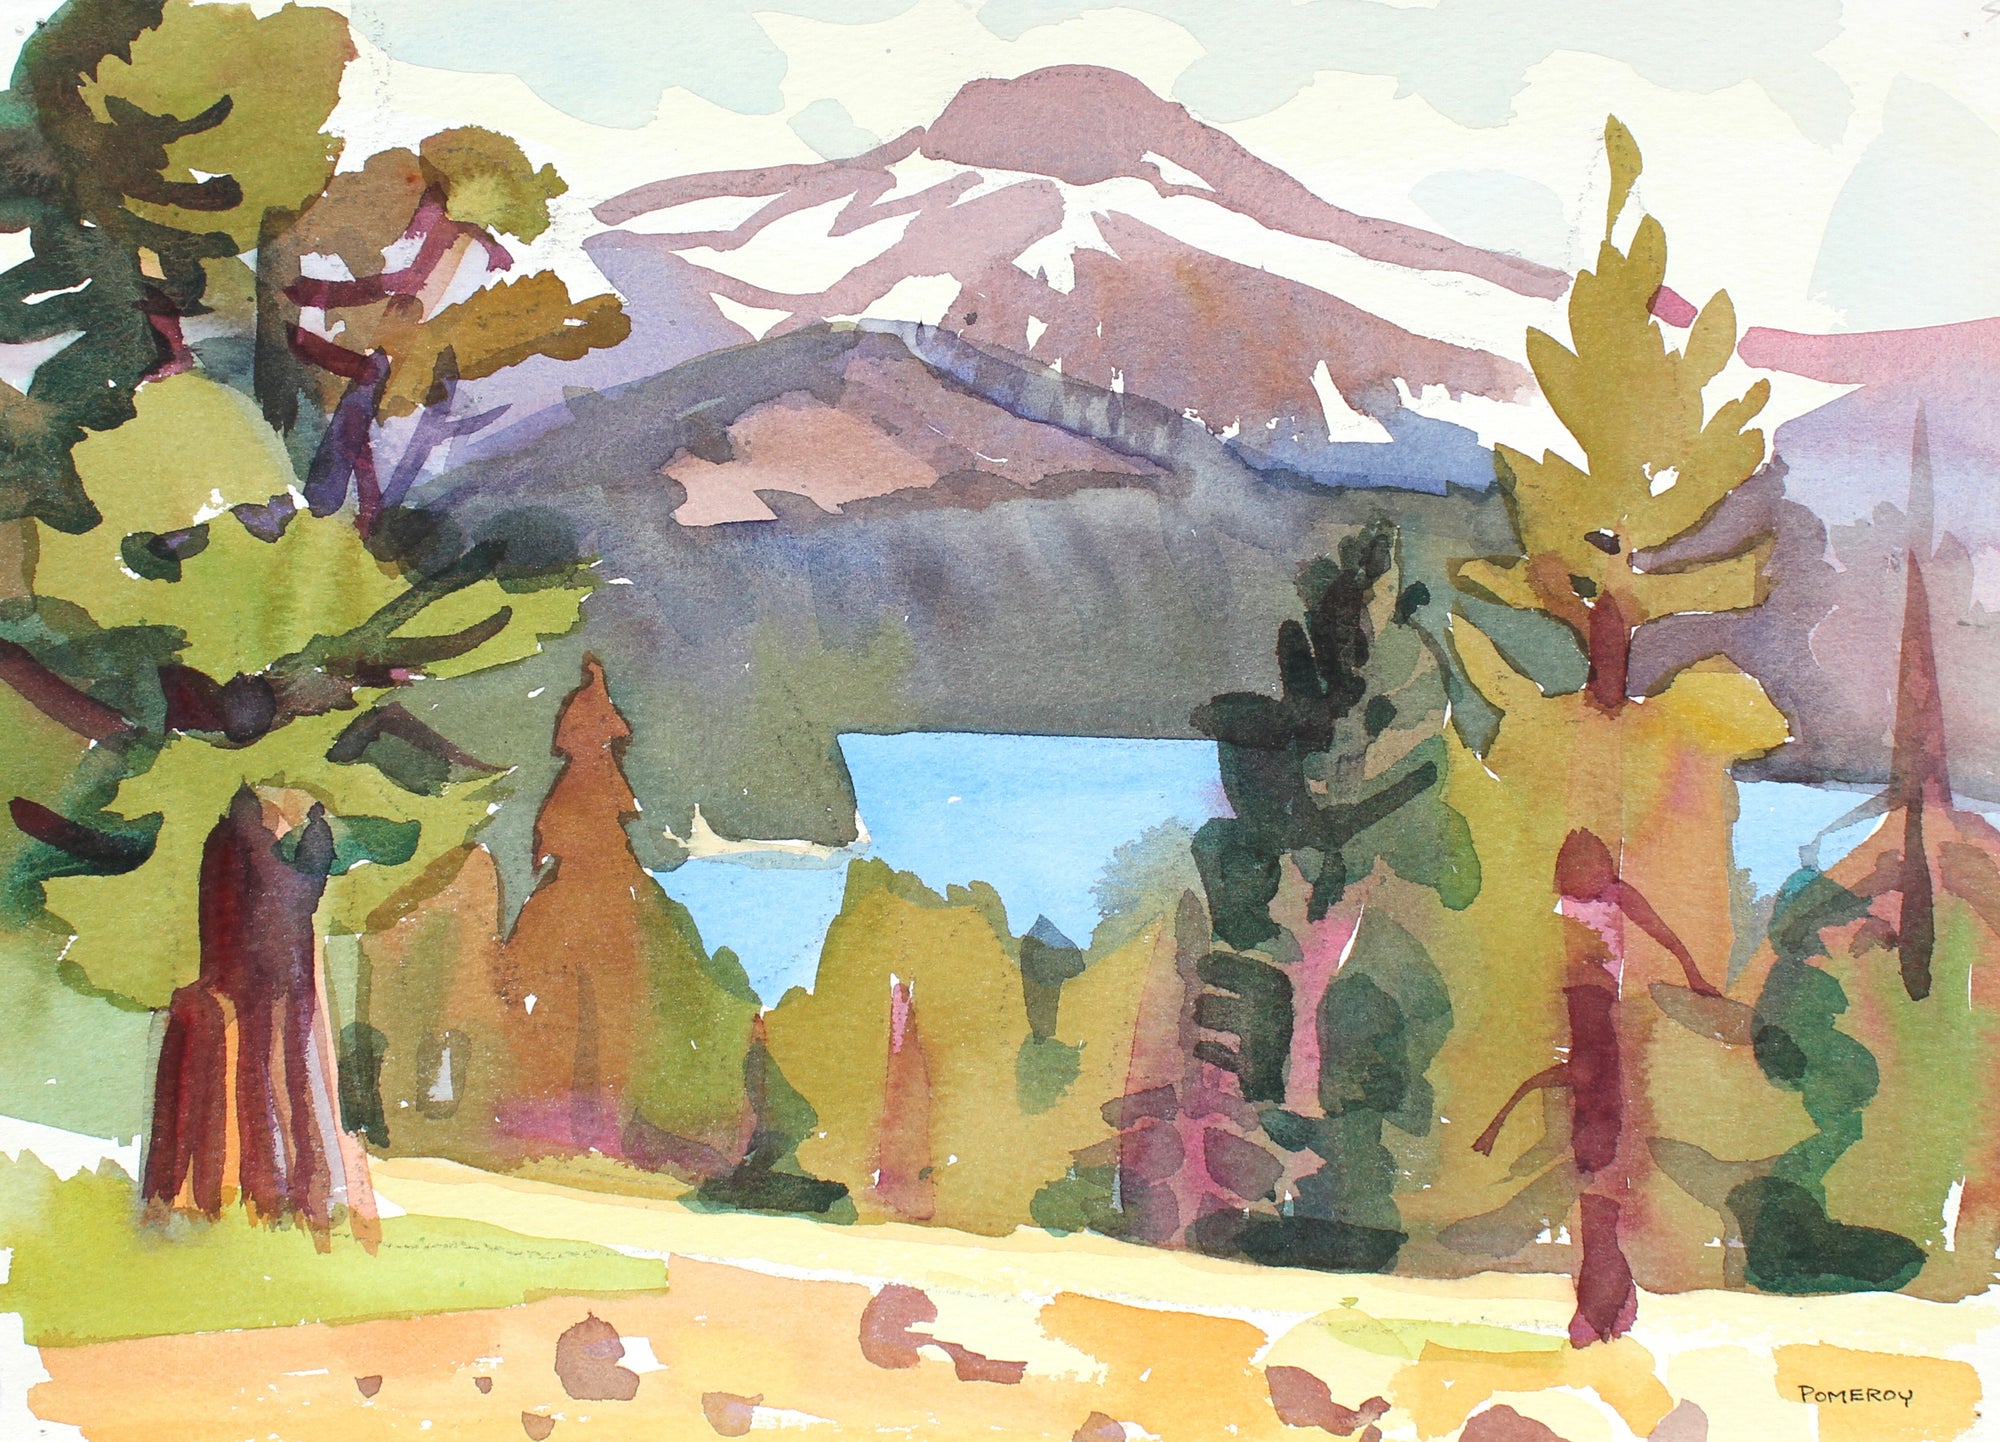 <i>Caples Lake</i> <br>1993 Watercolor <br><br>#93568